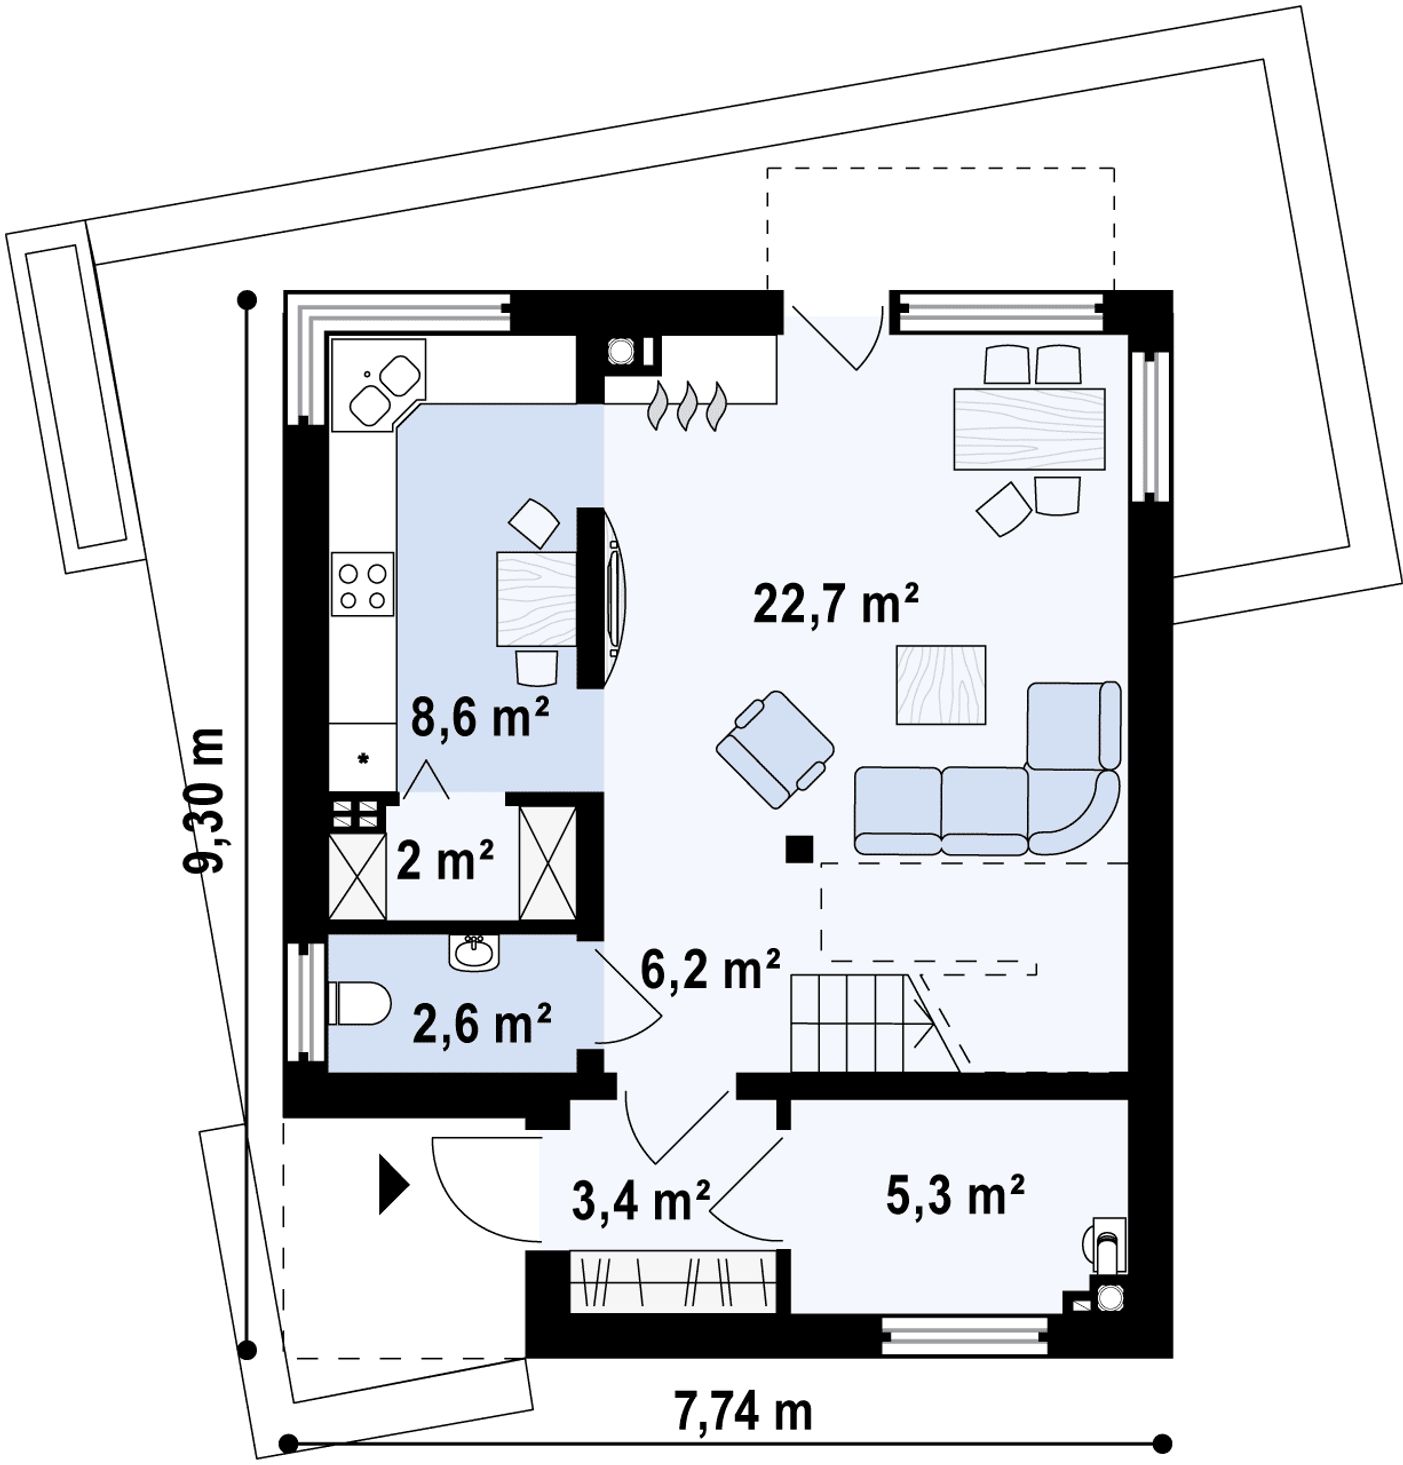 1-ый этаж - план проекта Zx51